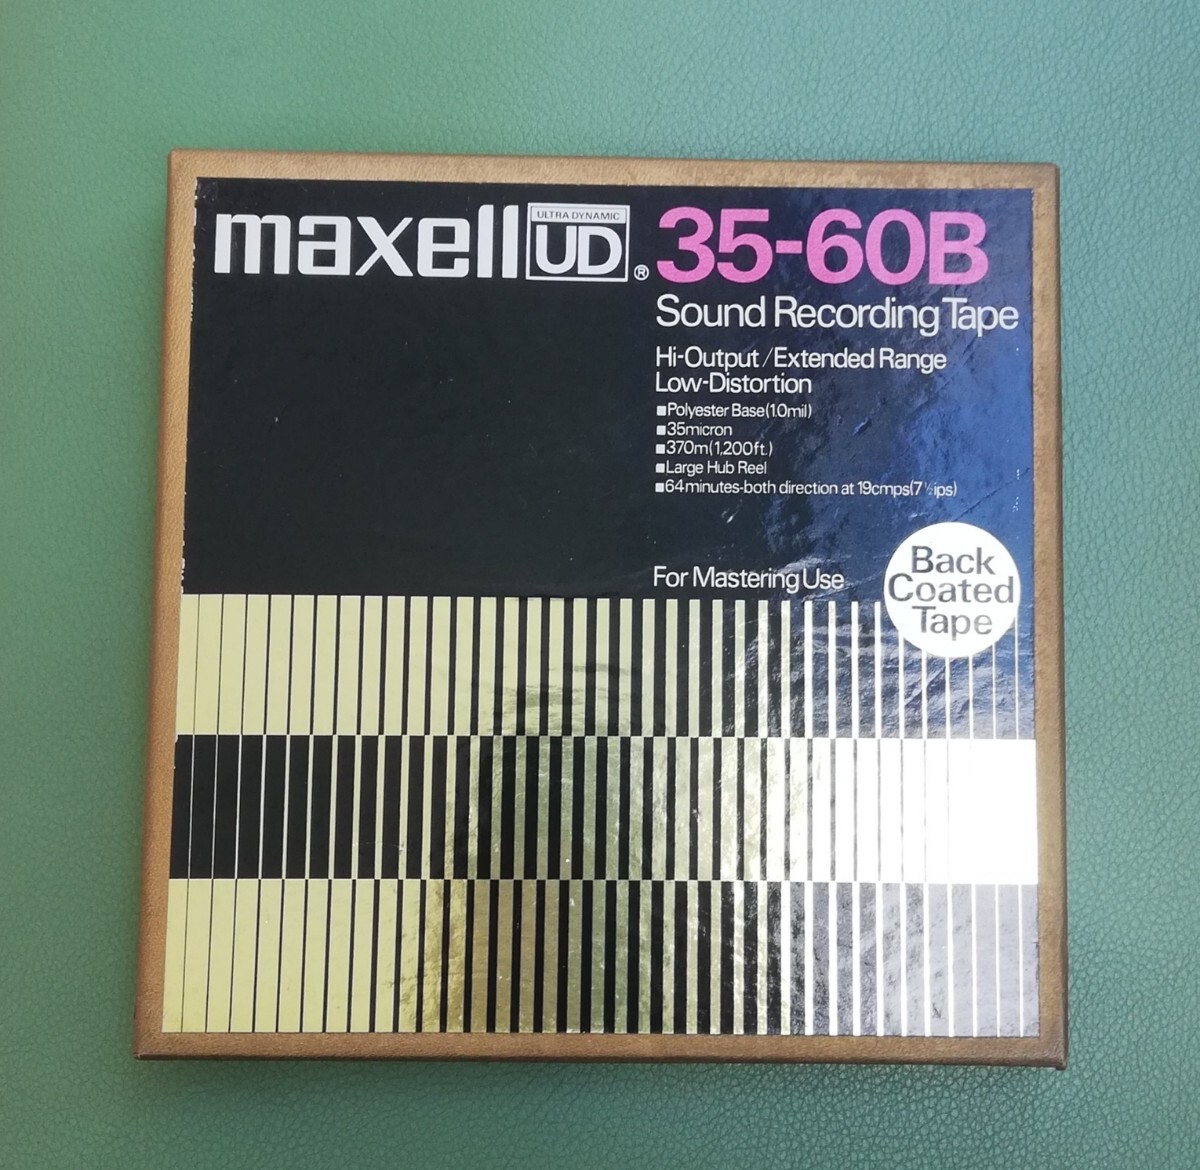  maxell UD 35-60B オープンリールテープ 日本マクセル MAXELL used 送料無料 の画像1